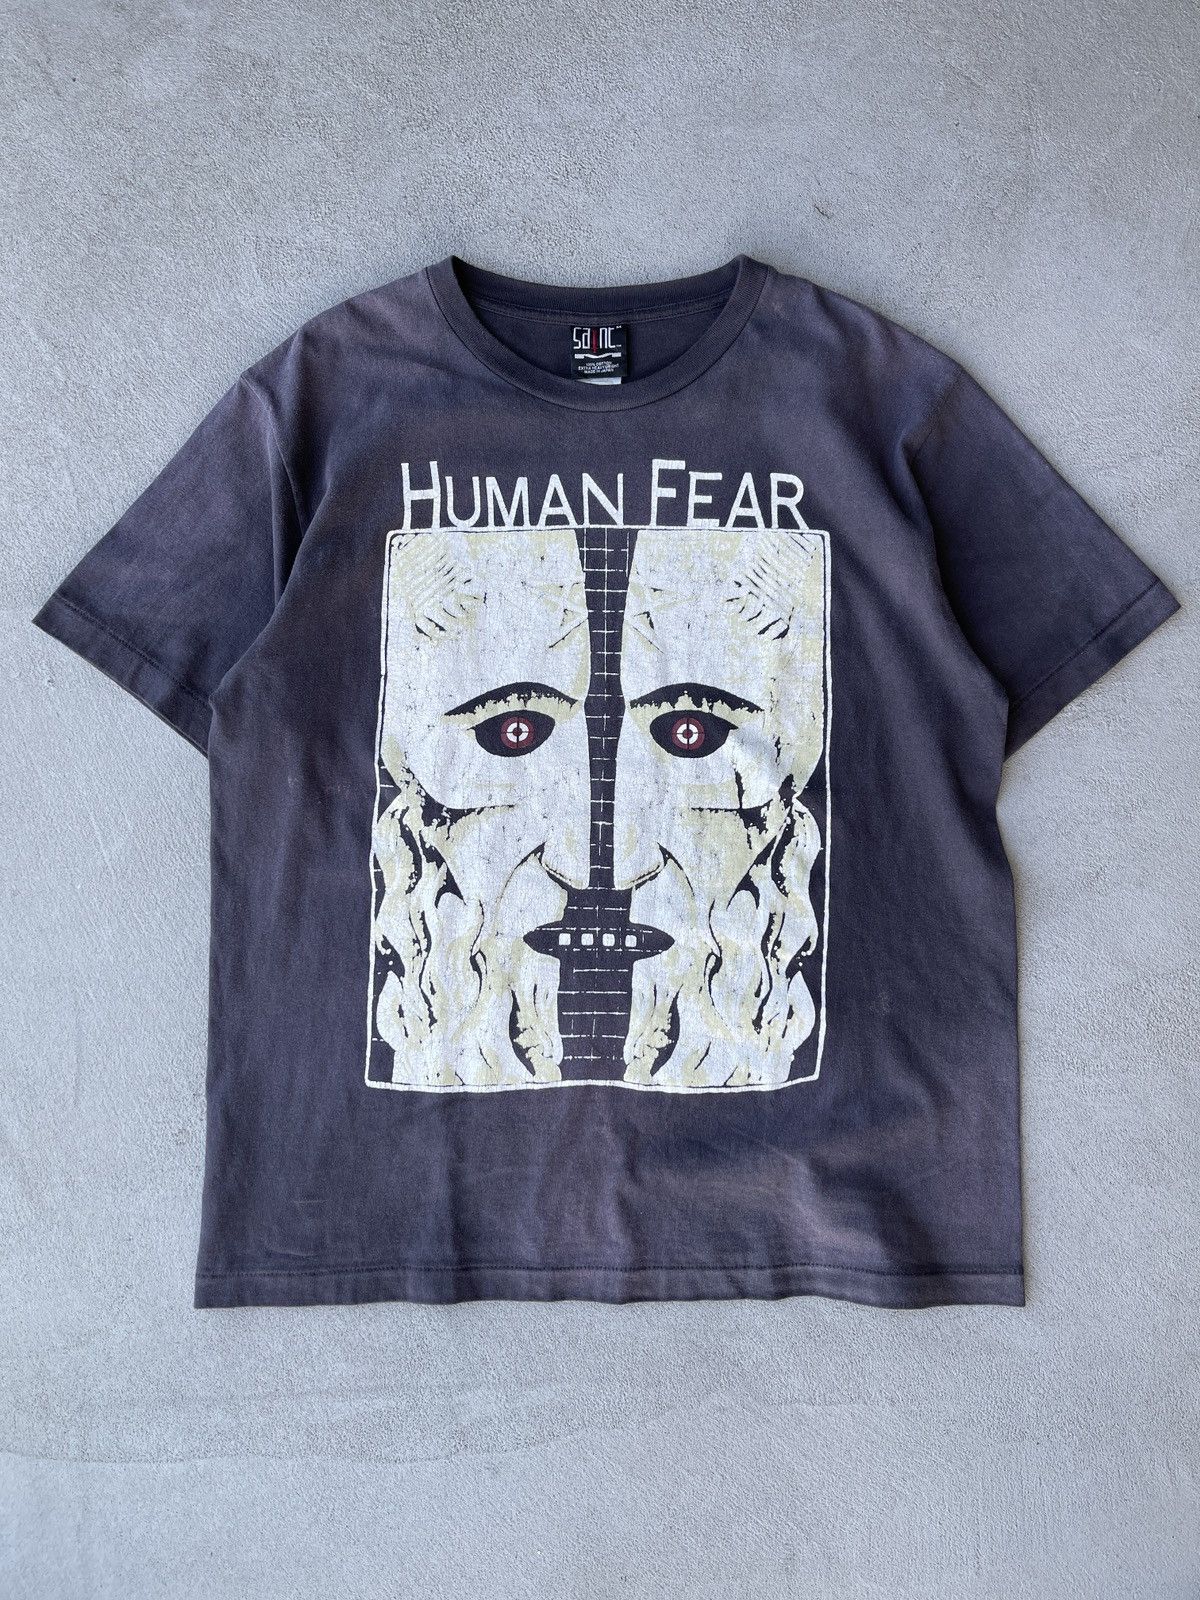 Japanese Brand - ARCHIVAL! 2010s Saint Michael Human Fear Tee (M) - 1